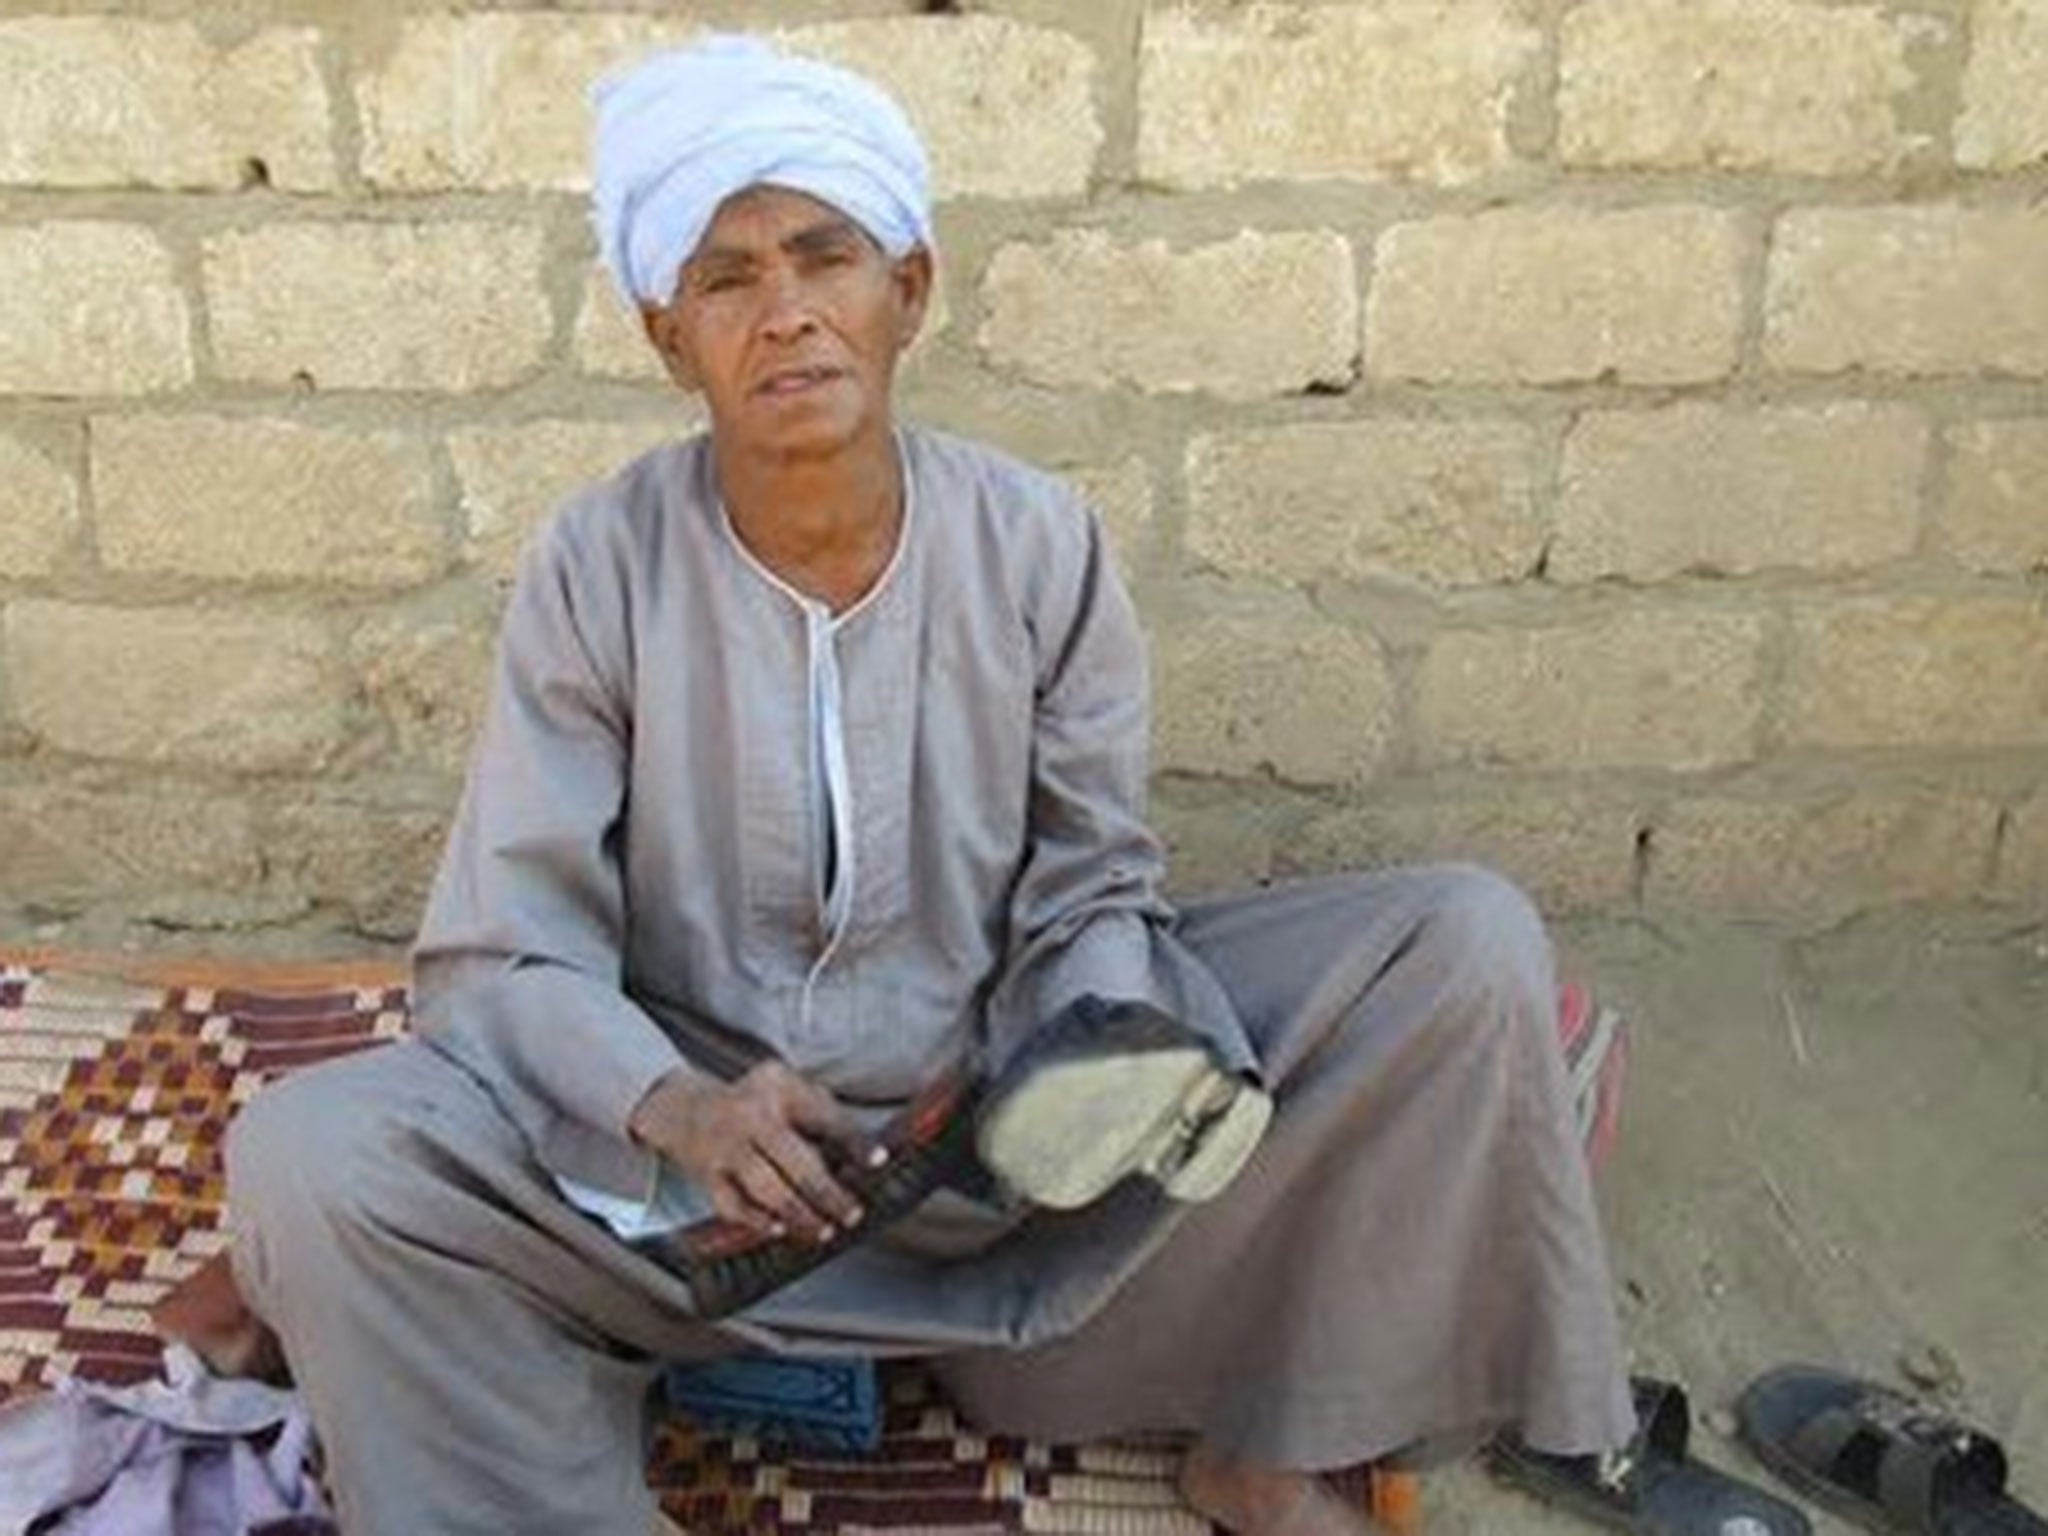 64-year-old Sisa Abu Daooh polishing shoes in a street in Luxor (Al Arabiya News English)